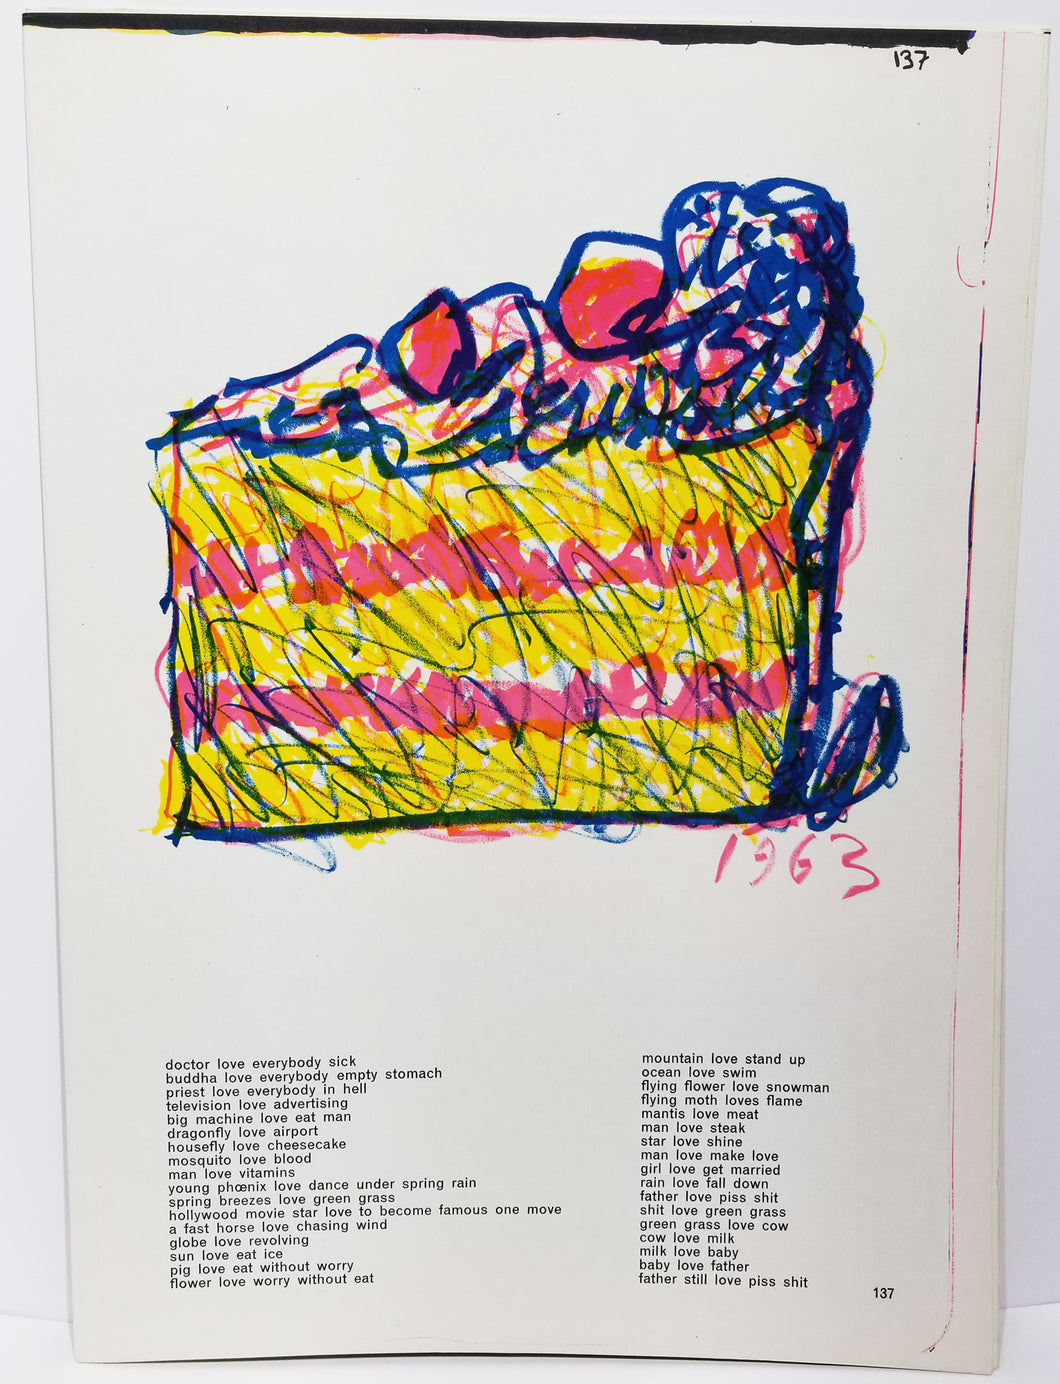 [A piece of cake]. 1964.